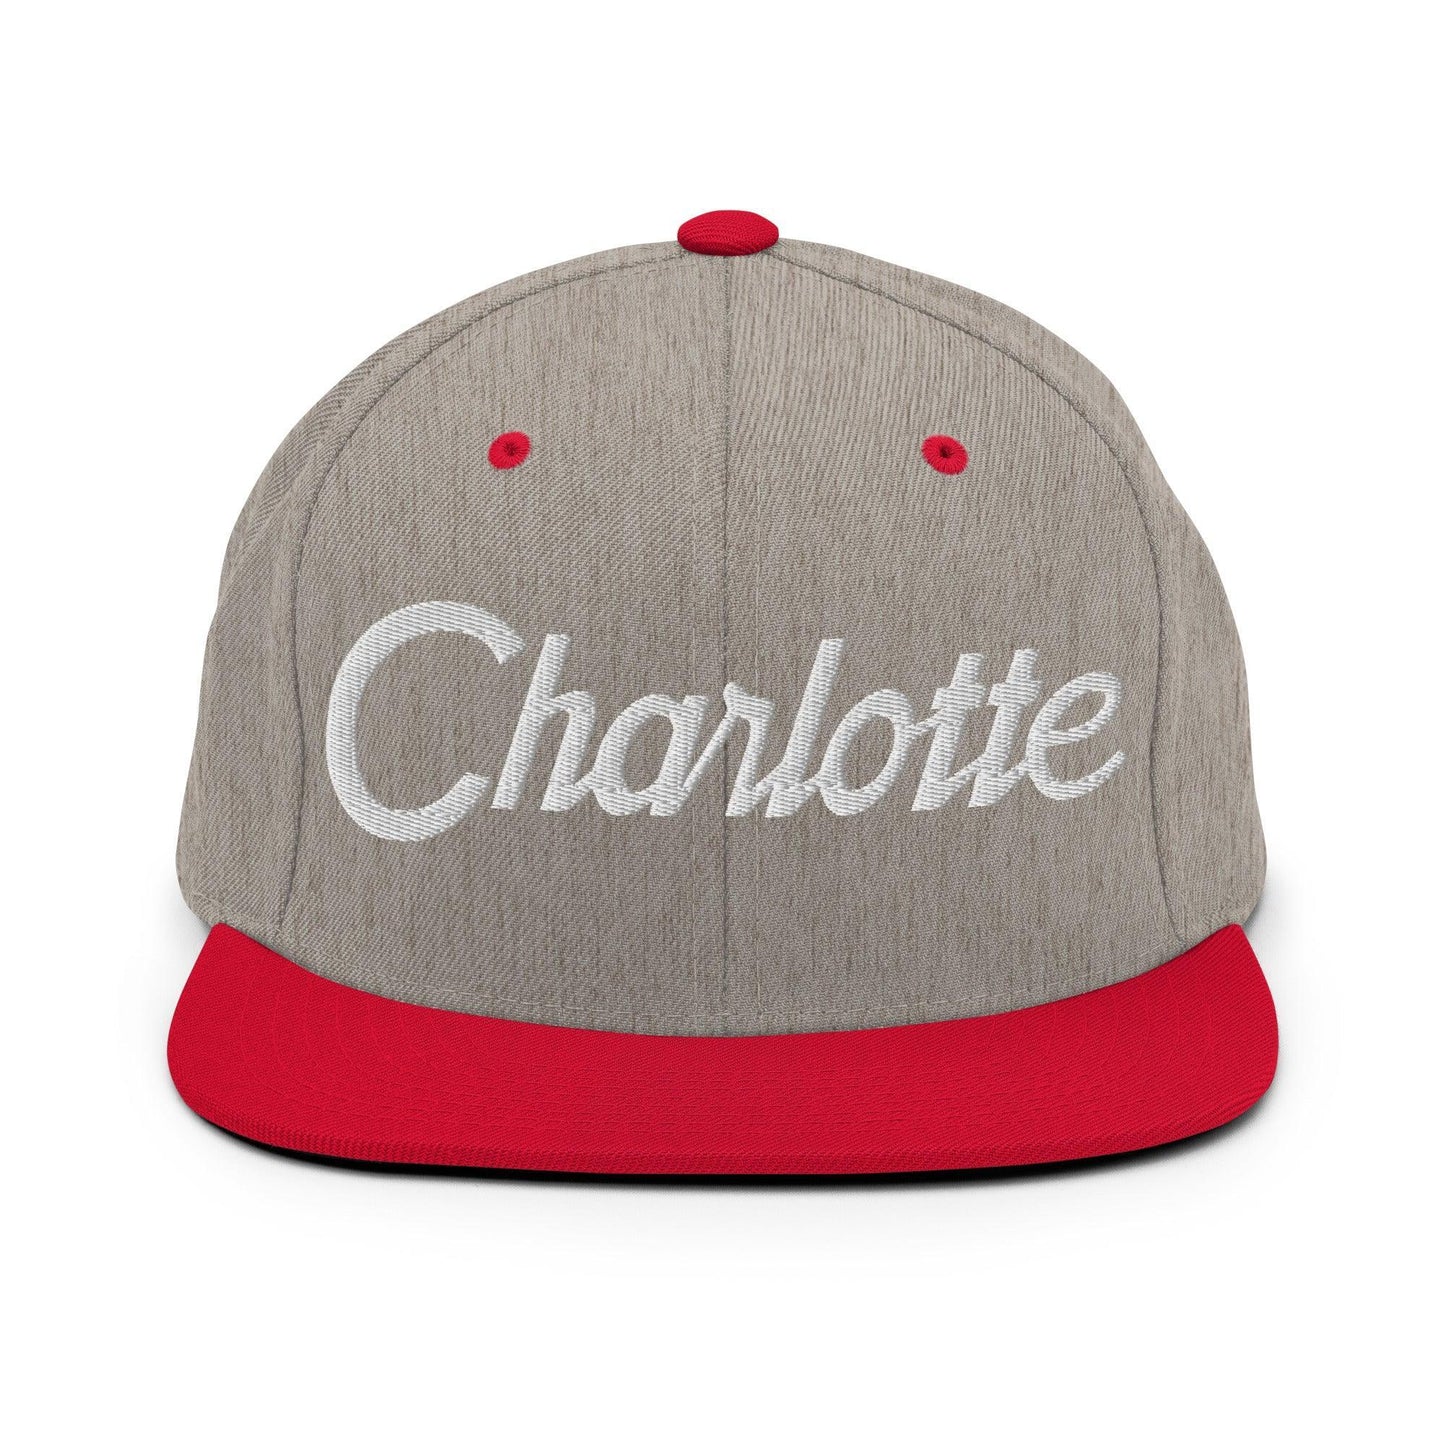 Charlotte Script Snapback Hat Heather Grey Red